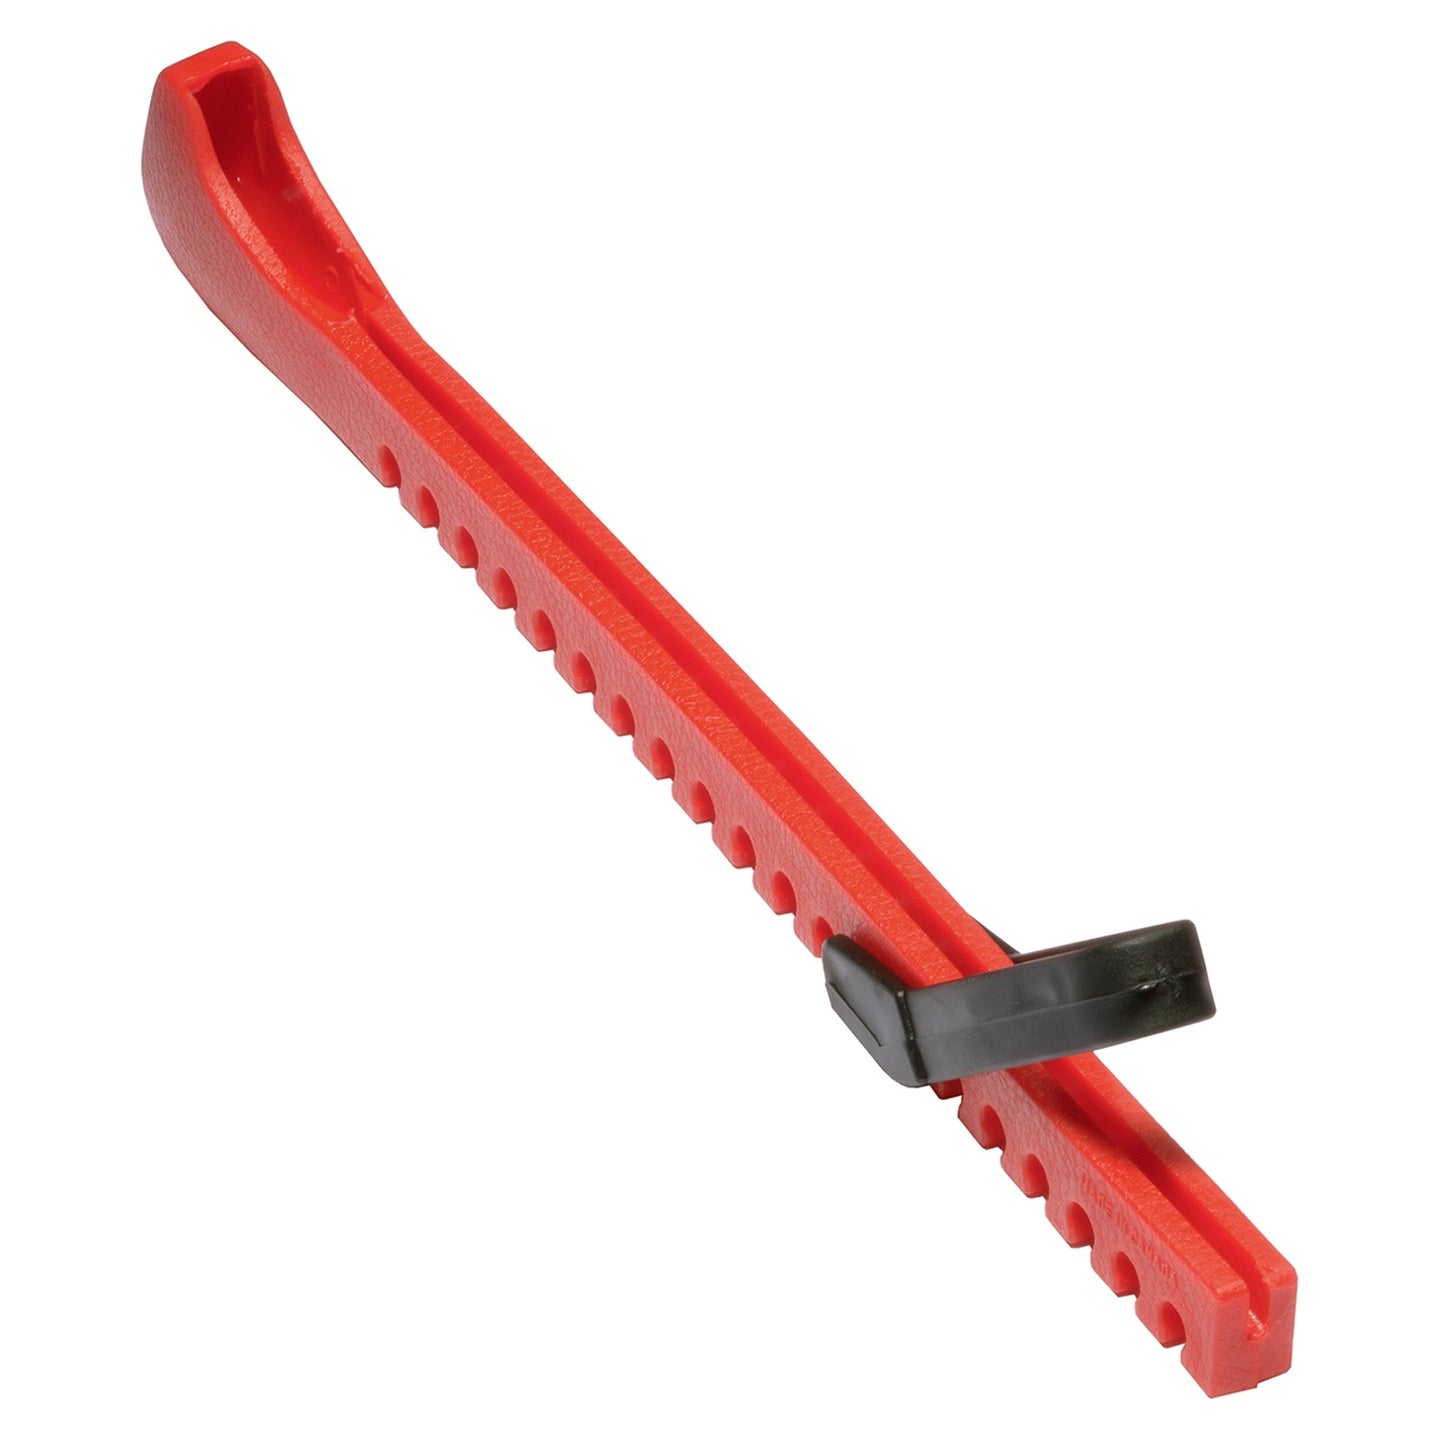 Blade protector ice skate Sher-wood plastic adjustable black, red, blue, white, pink